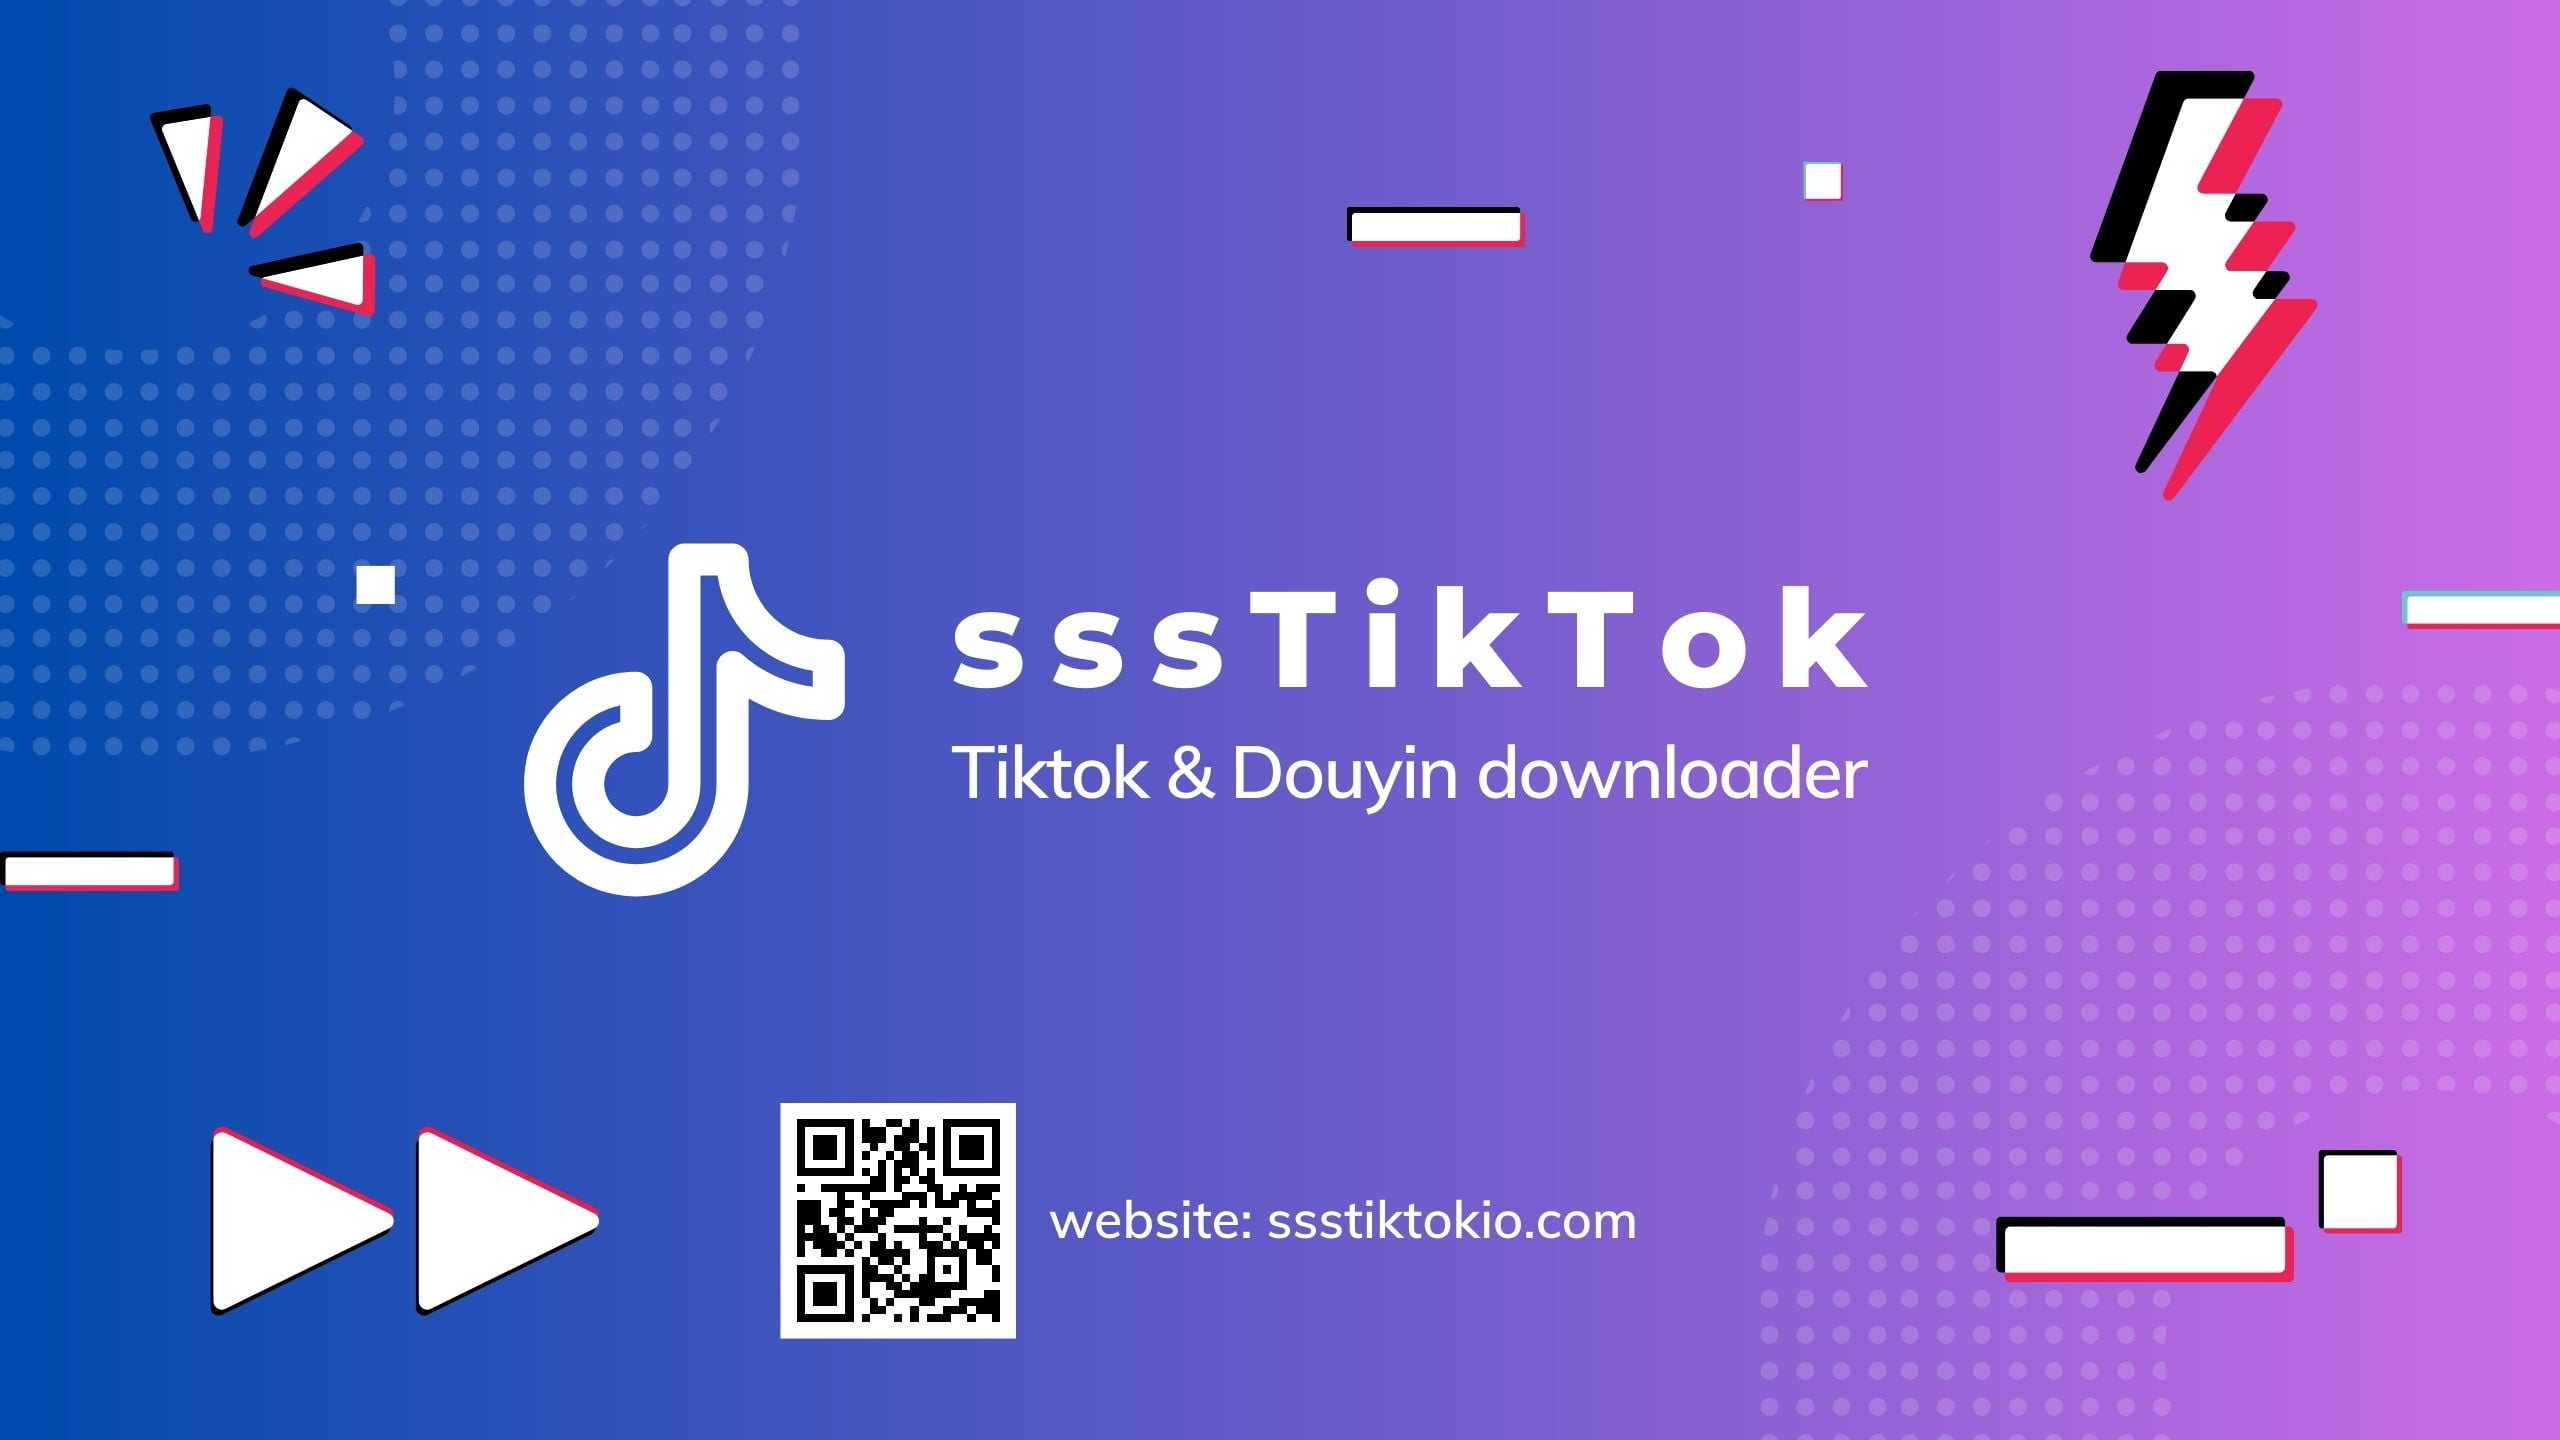 sssTiktok - 免費在線 Tiktok 視頻下載器